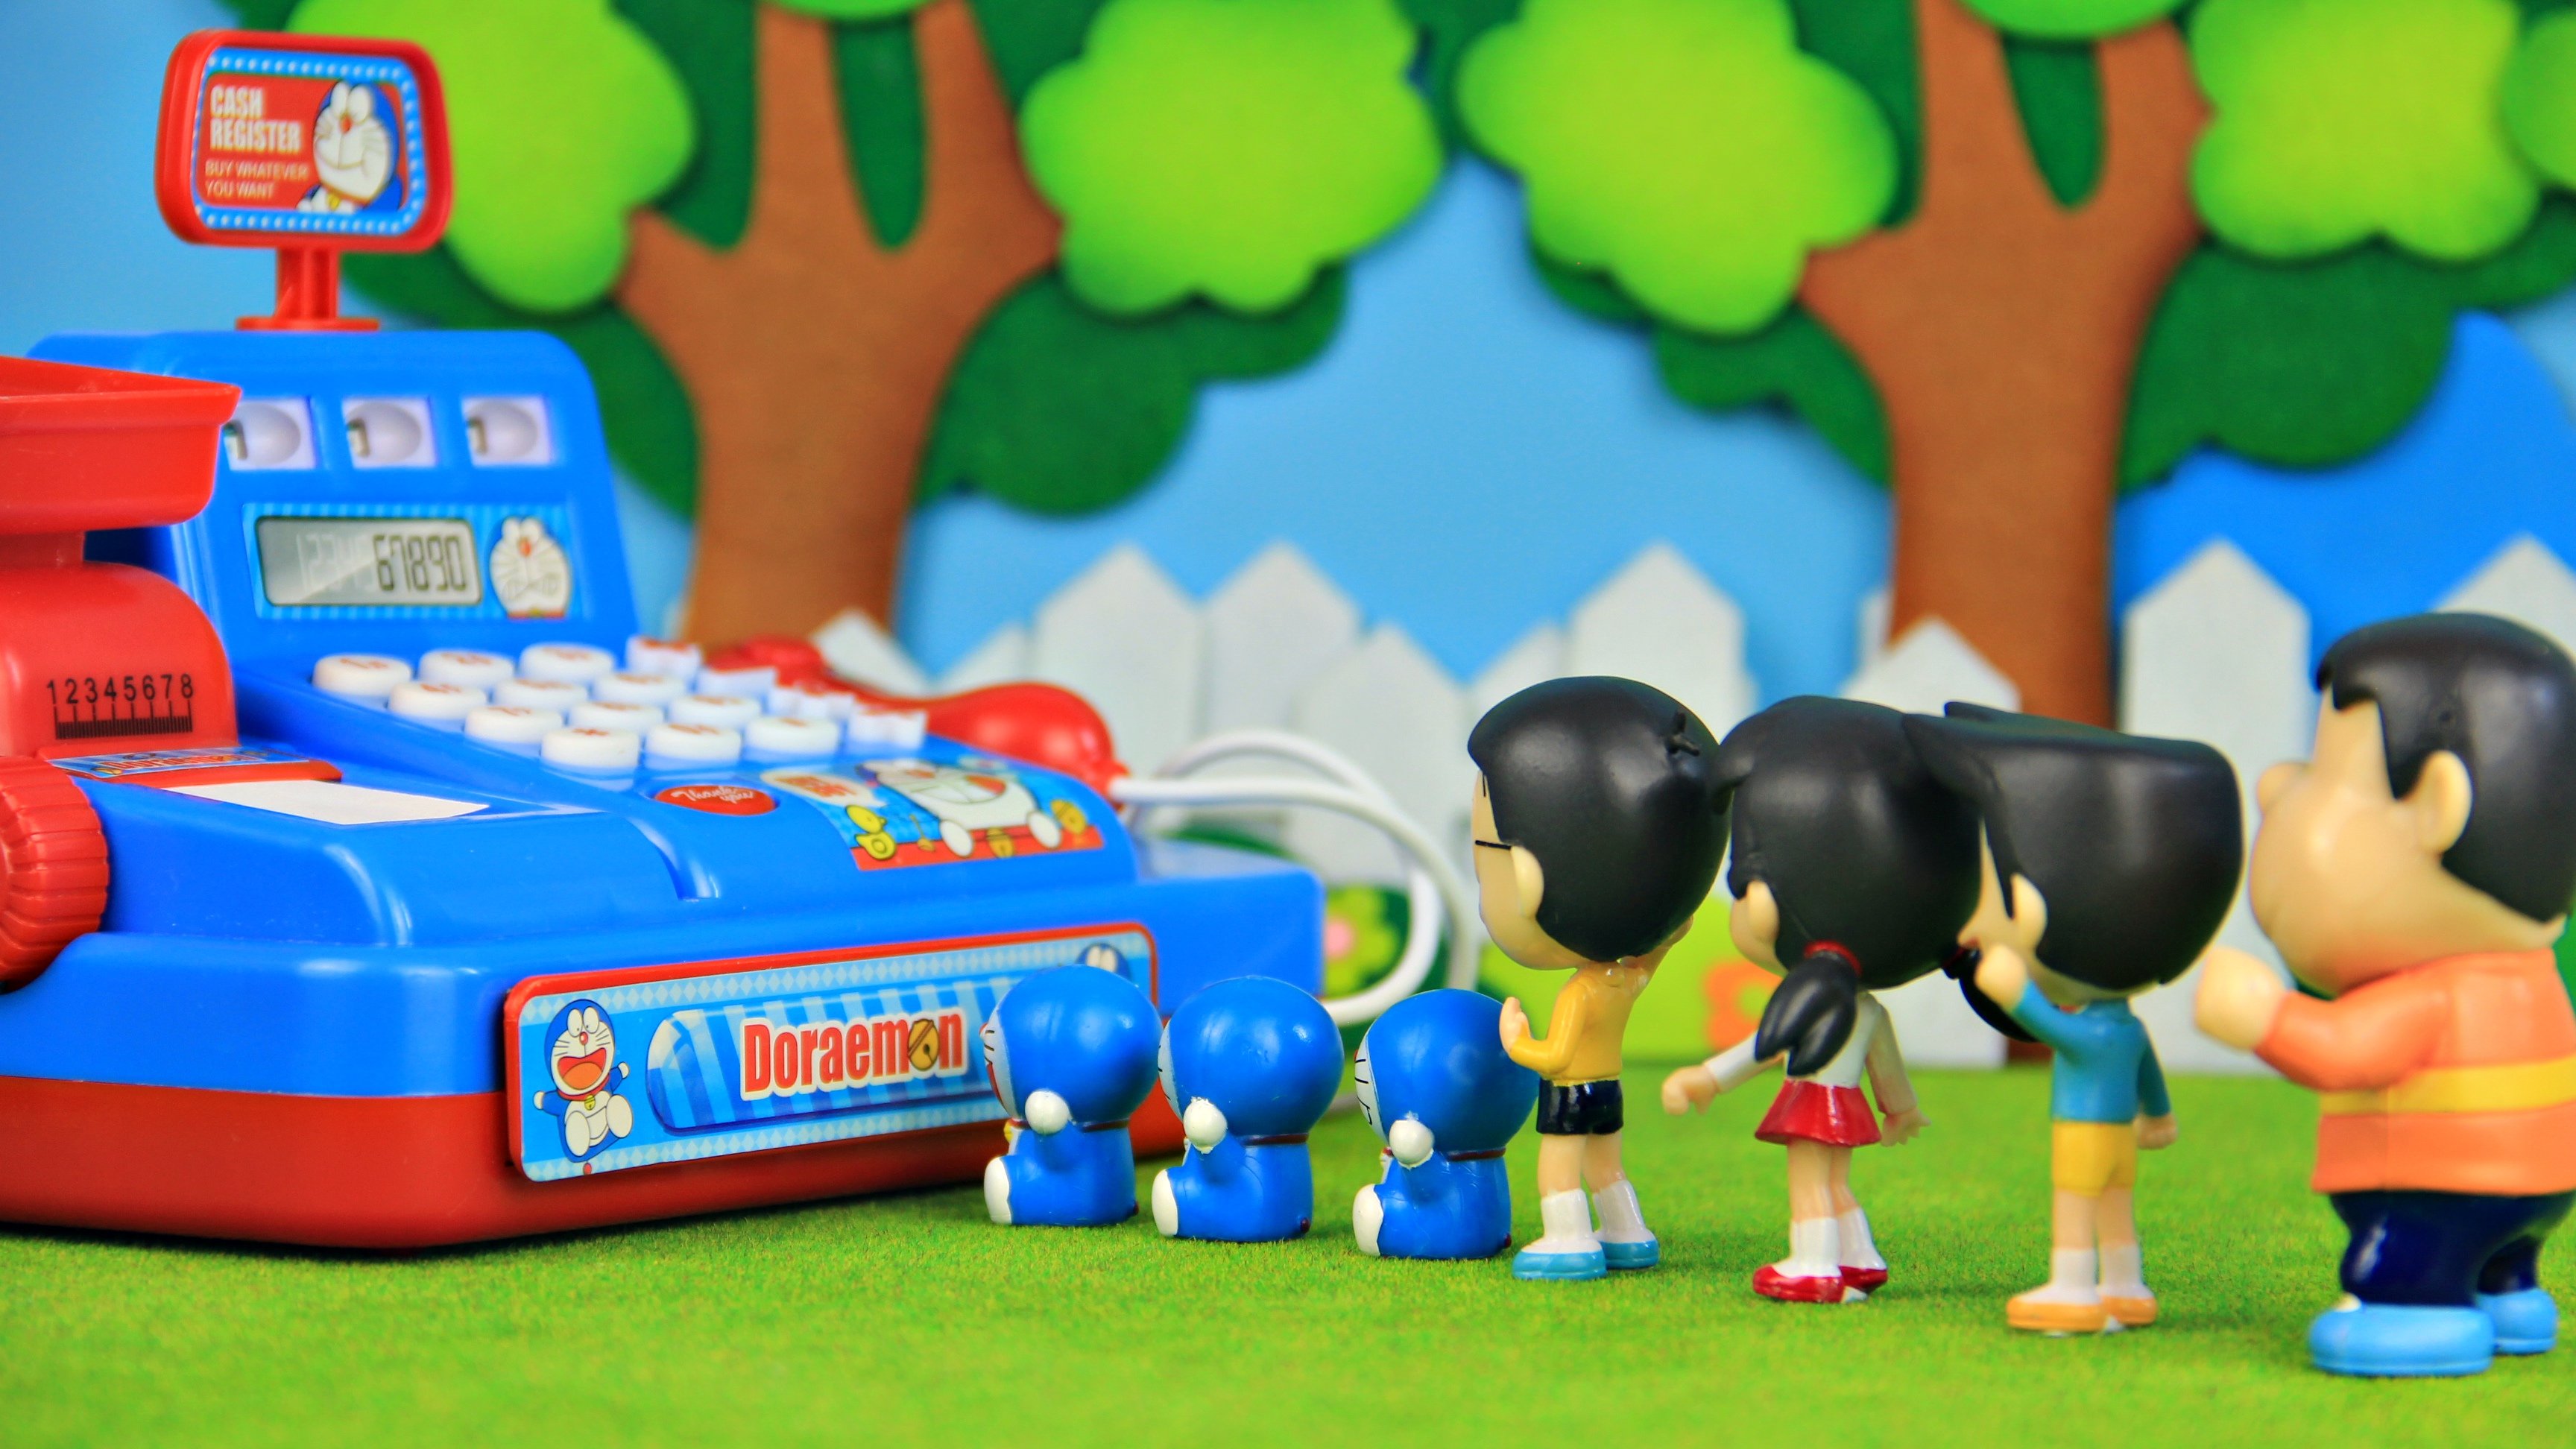 Giftwhat Doraemon Toys Go Into Spo Spo Cash Register ドラえもん おもちゃ ドラえもん おもちゃ アニメ ドラえもんがspo Spoのレジに入る Watch T Co 7tw2dd6p8g Doraemon ドラえもん Doremon 哆啦a梦 Spo Spospo Toys Kids